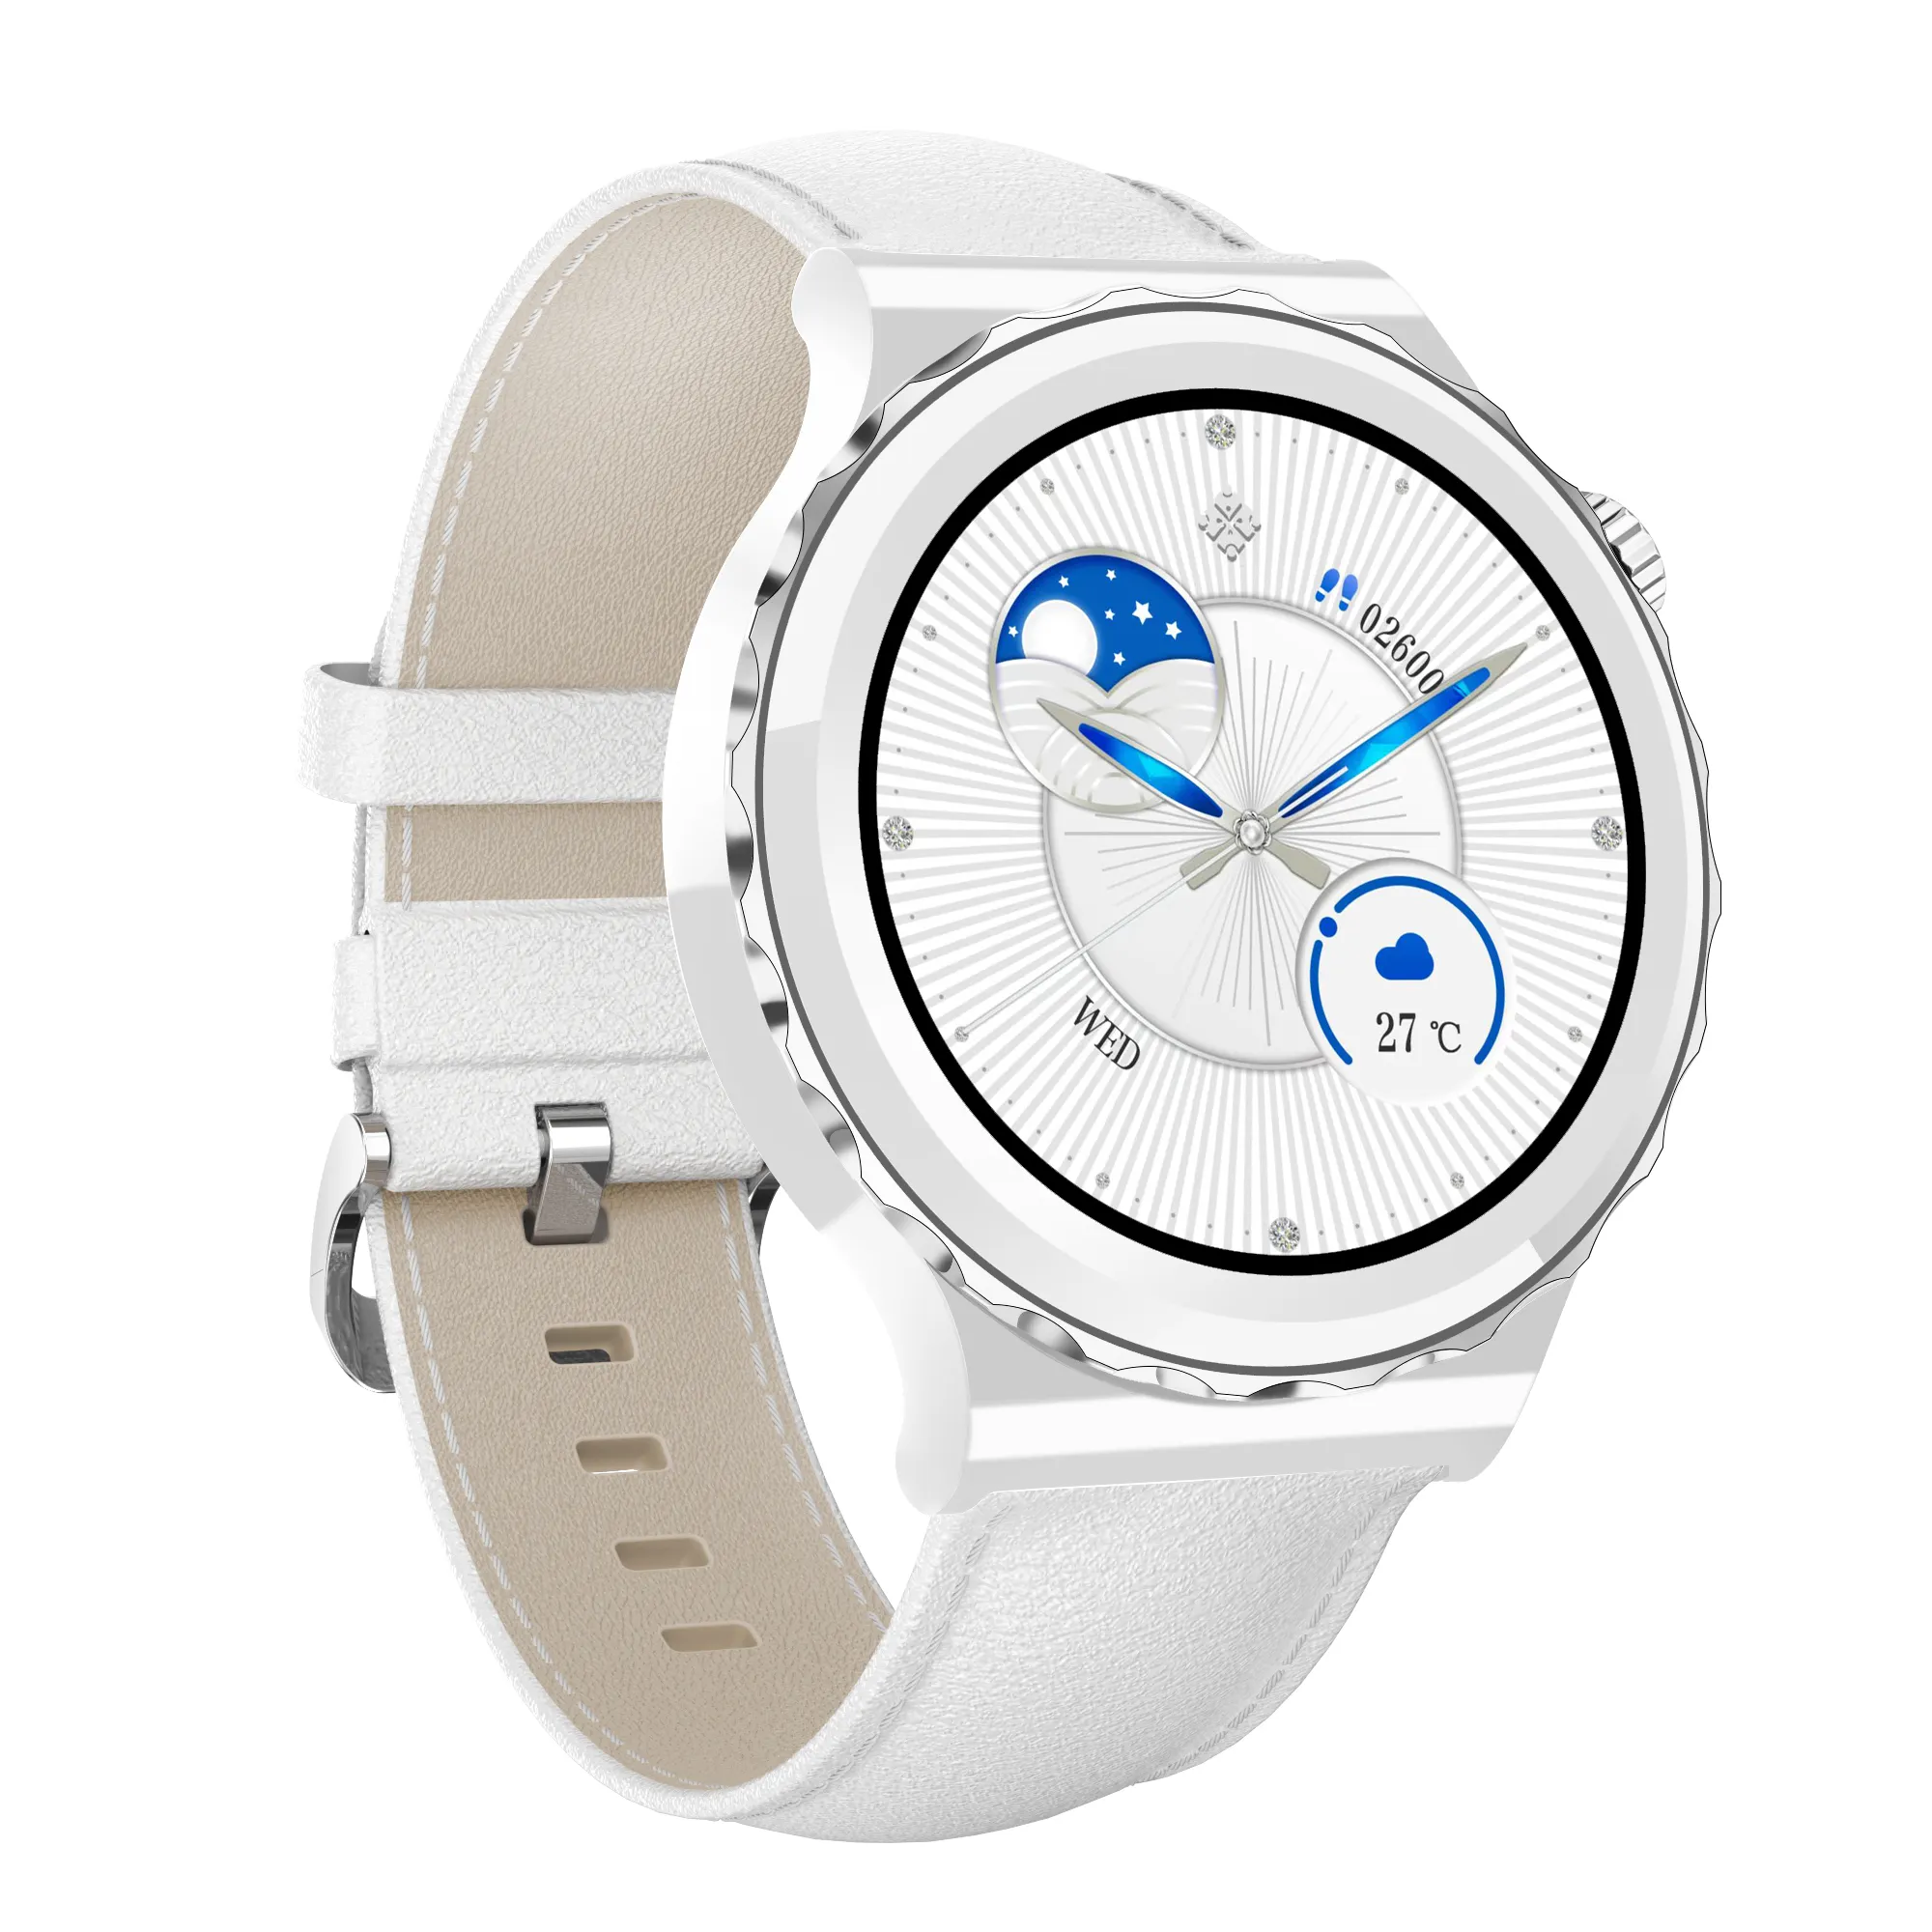 Smartwatch caldo E23 1.32 pollici Full Touch Screen orologi intelligenti BT chiamata frequenza cardiaca uomini gioco Sport Outdoor Smart Watch T30 H20